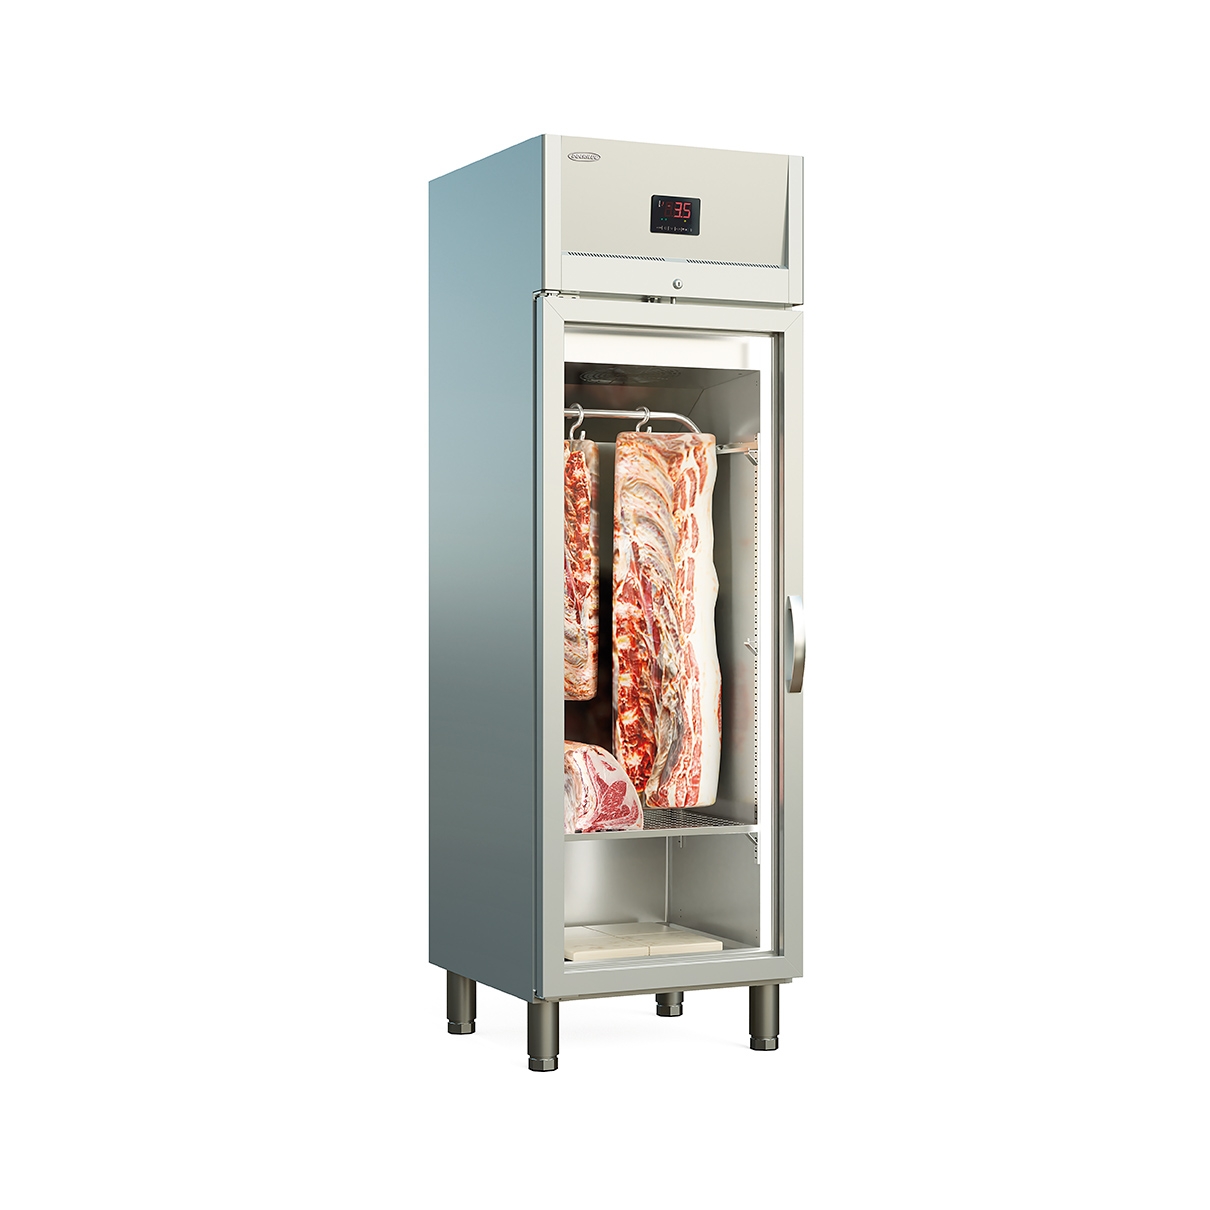 Meat Ripening Cabinet "Dry Aging" DDA-400